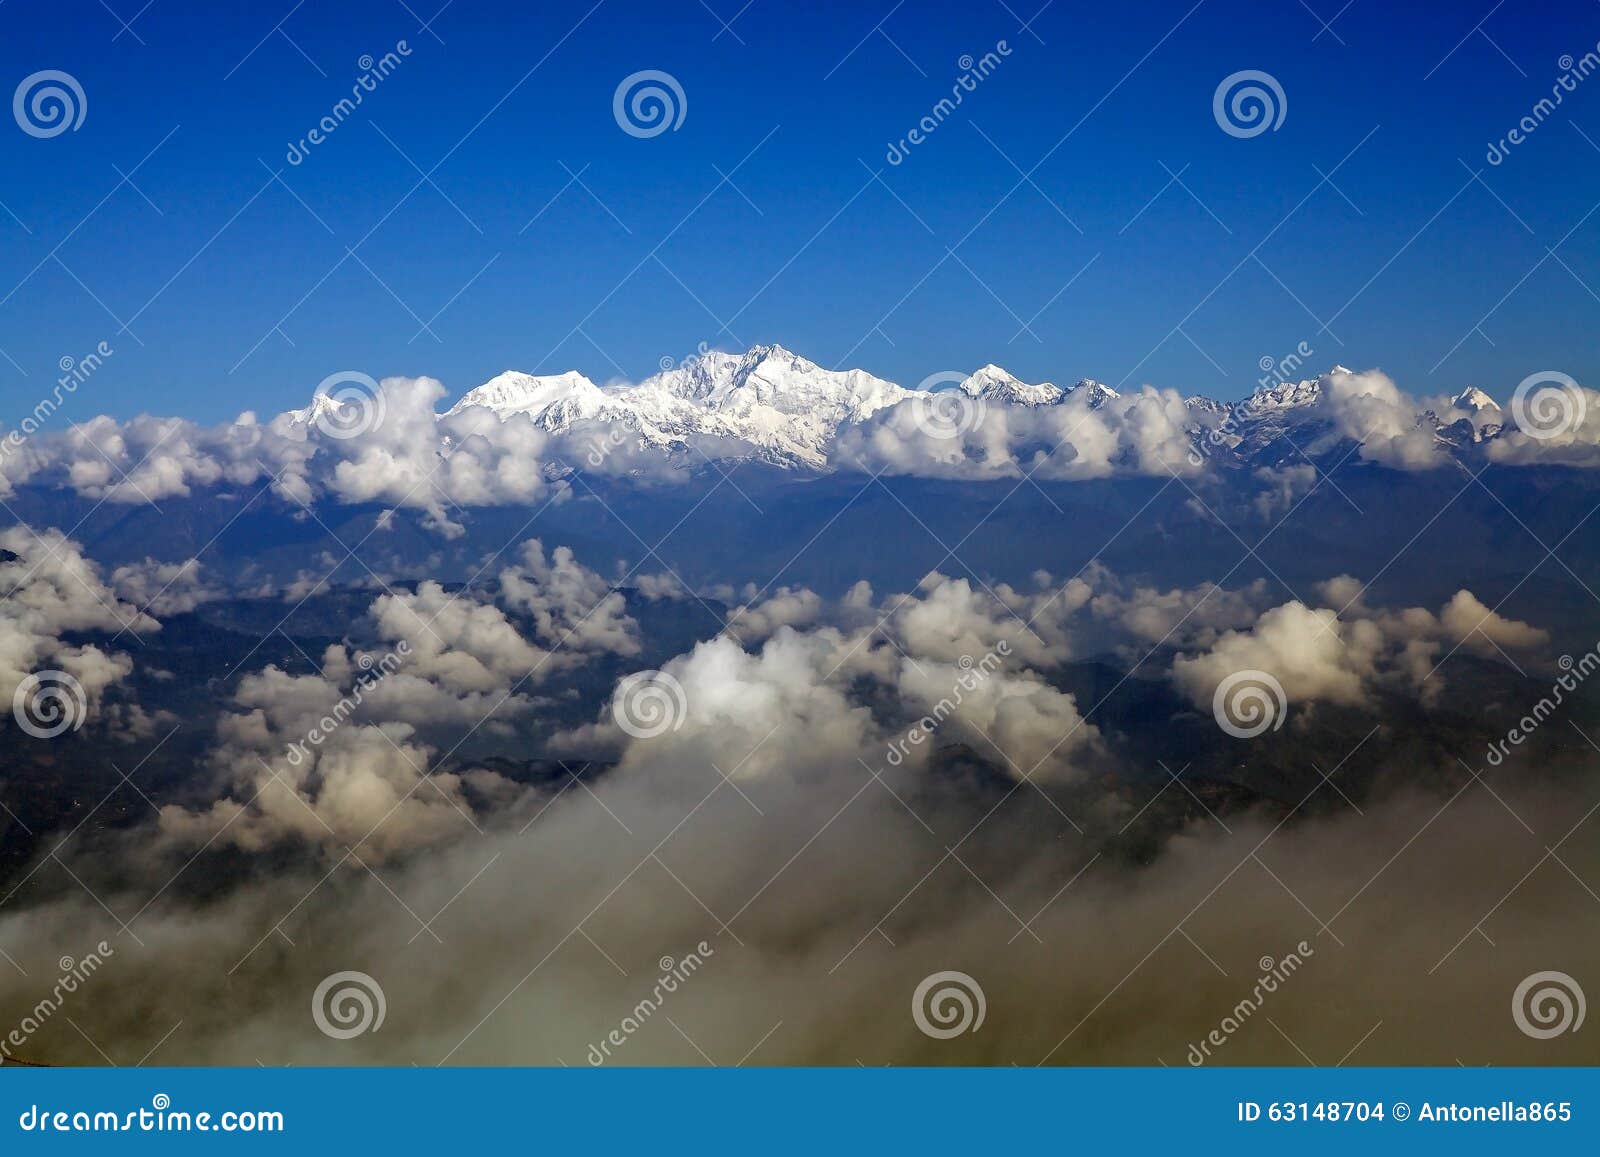 kangchenjunga mountain, sikkim, india